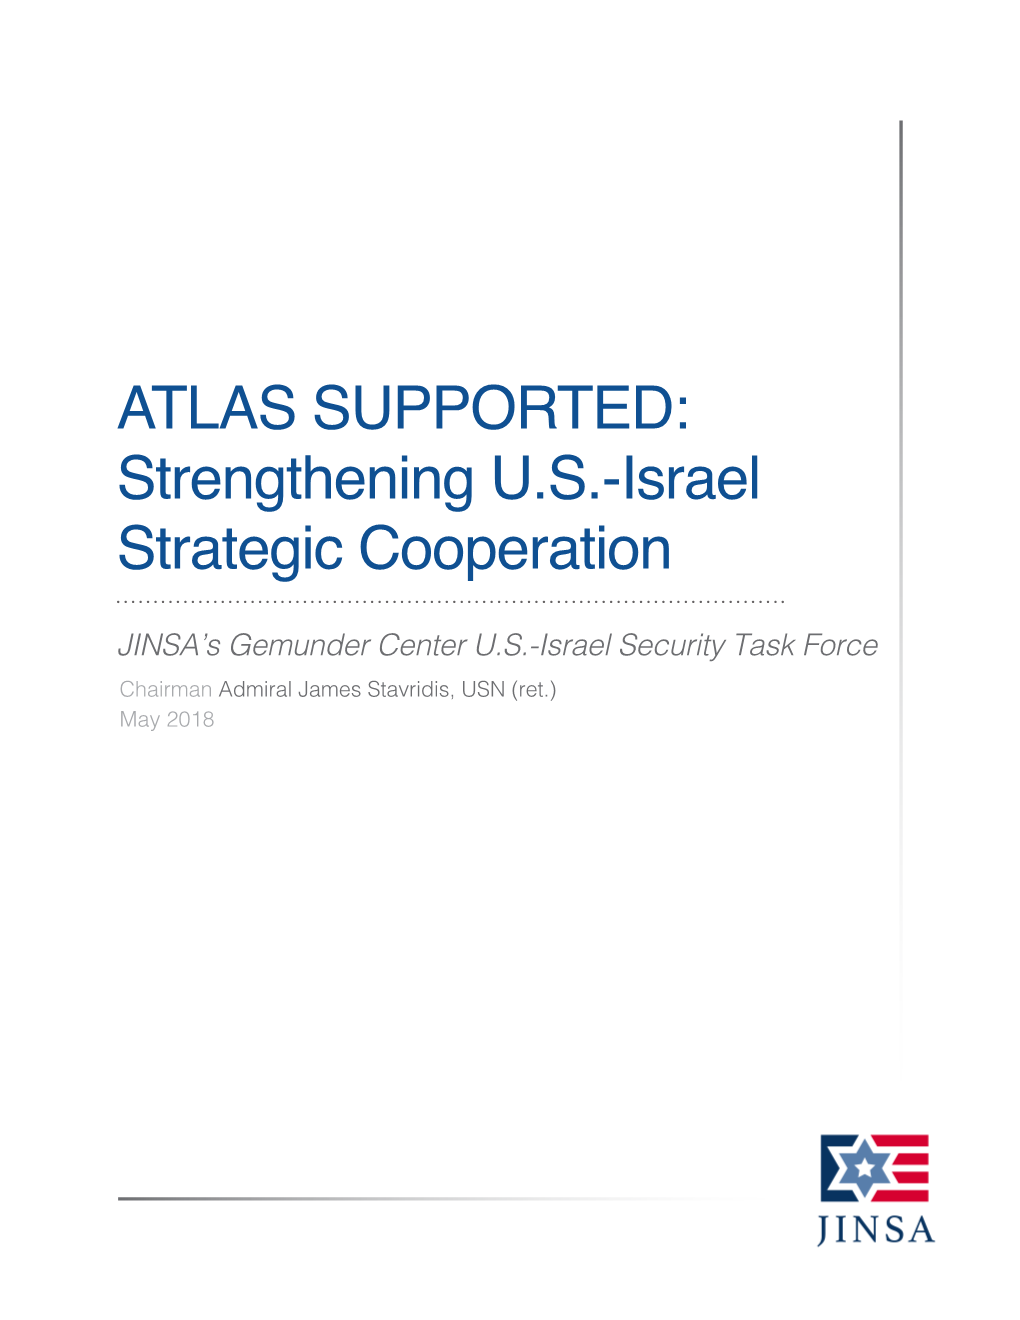 ATLAS SUPPORTED: Strengthening U.S.-Israel Strategic Cooperation